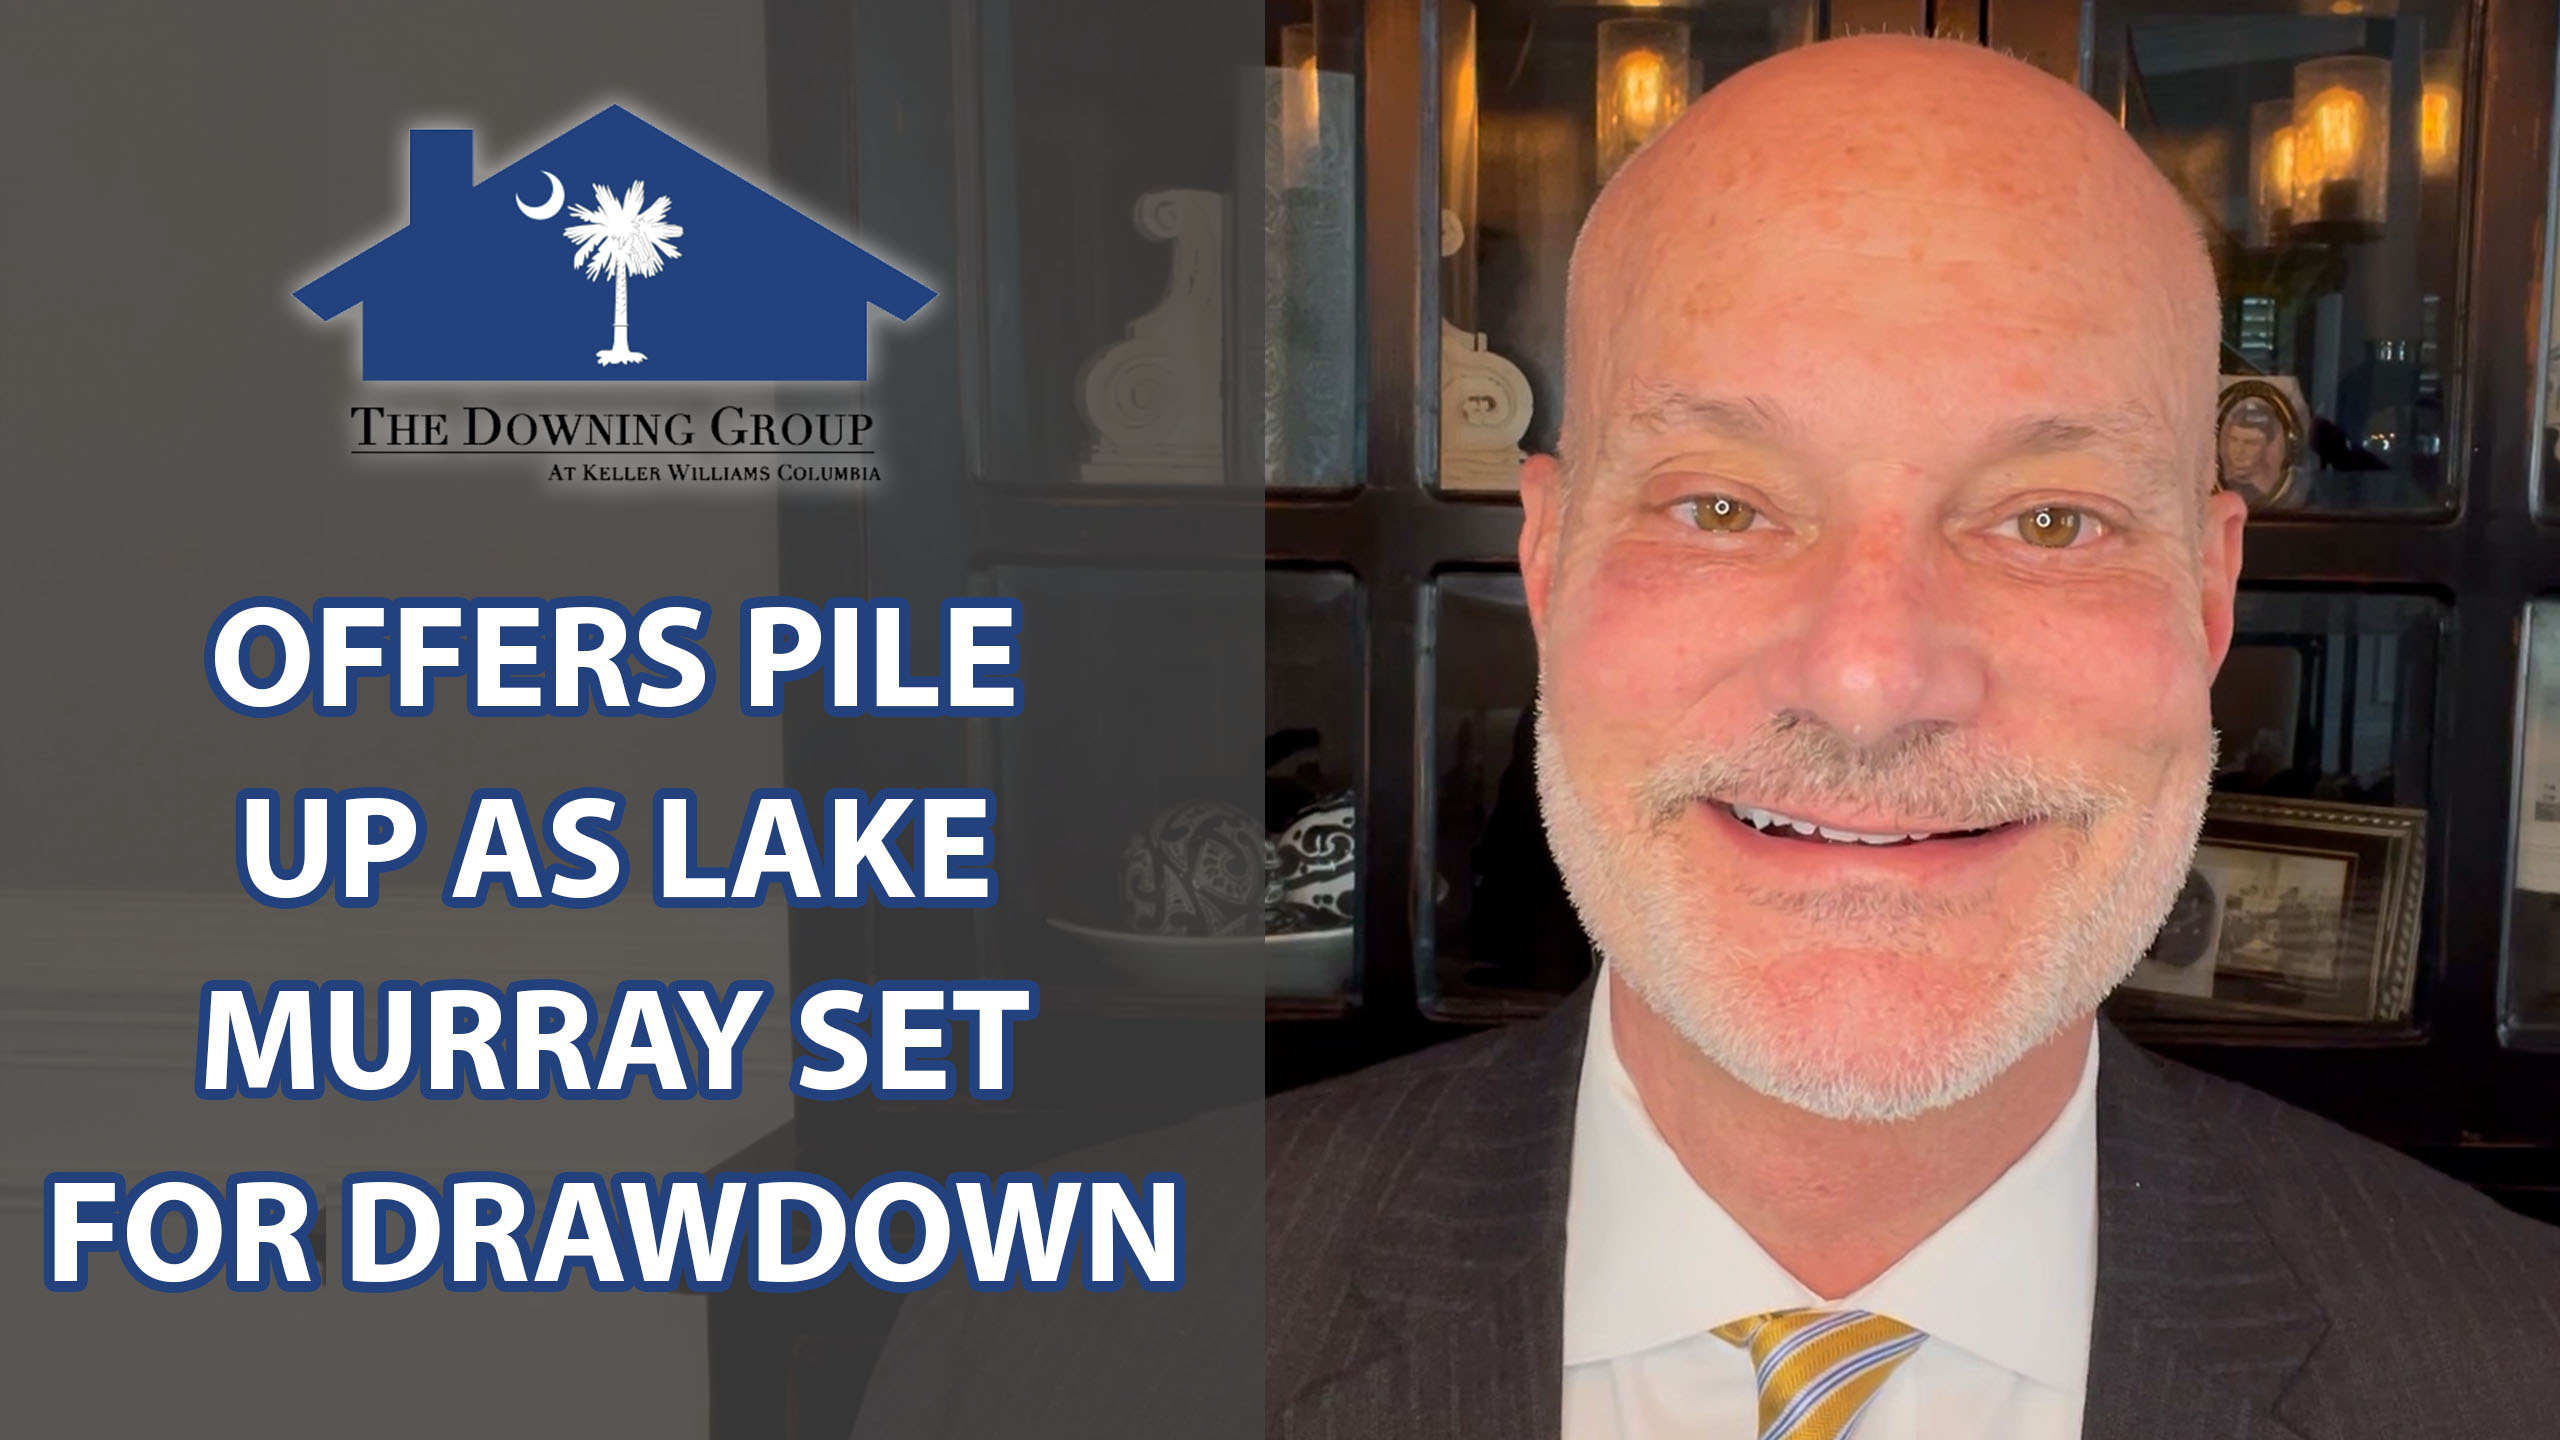 Lake Murray’s Winter Drawdown The Downing Group